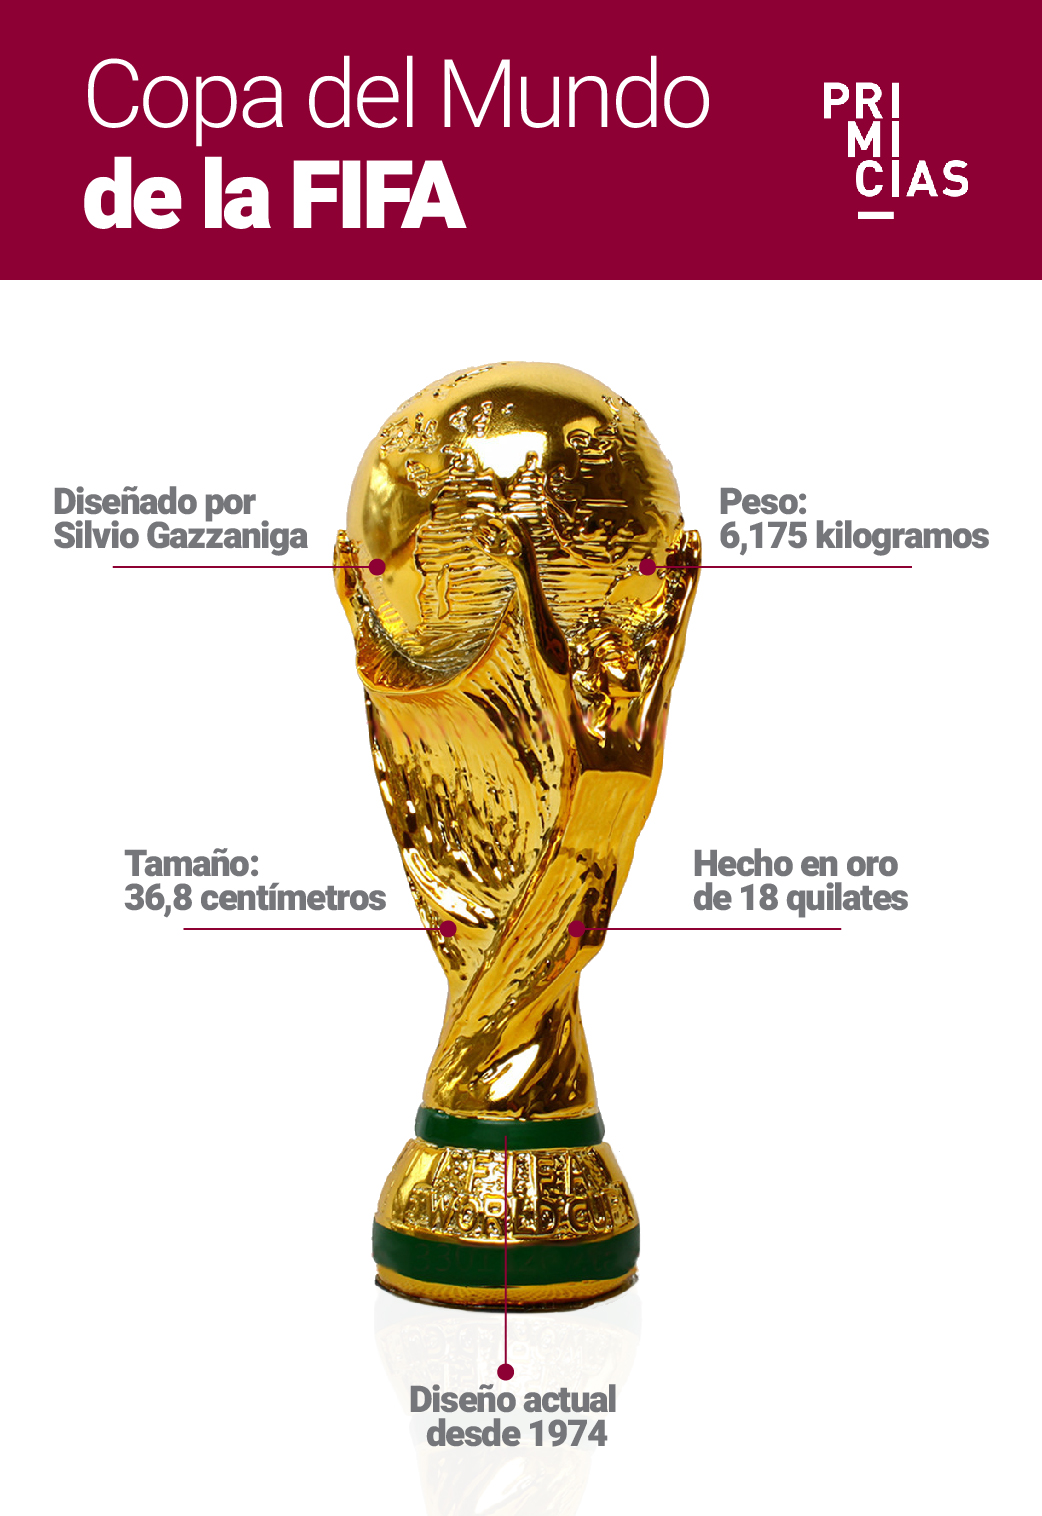 Historia del trofeo de la Copa del Mundo